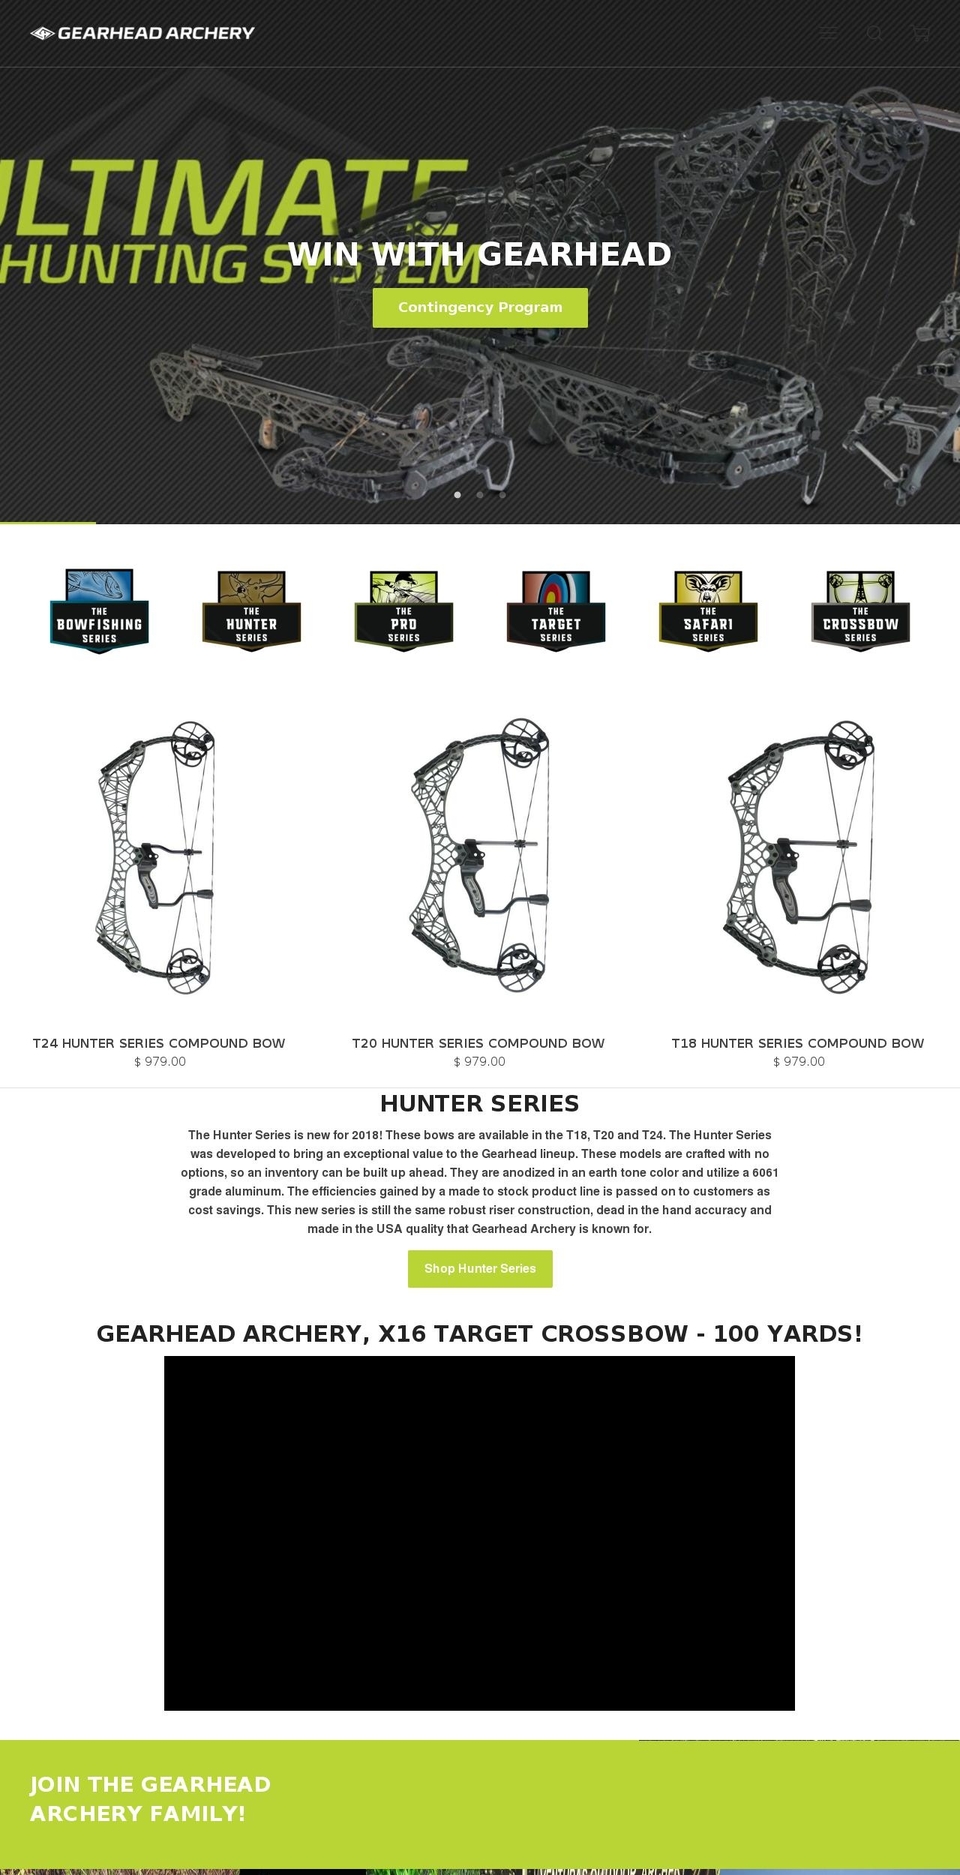 gearheadarchery.info shopify website screenshot